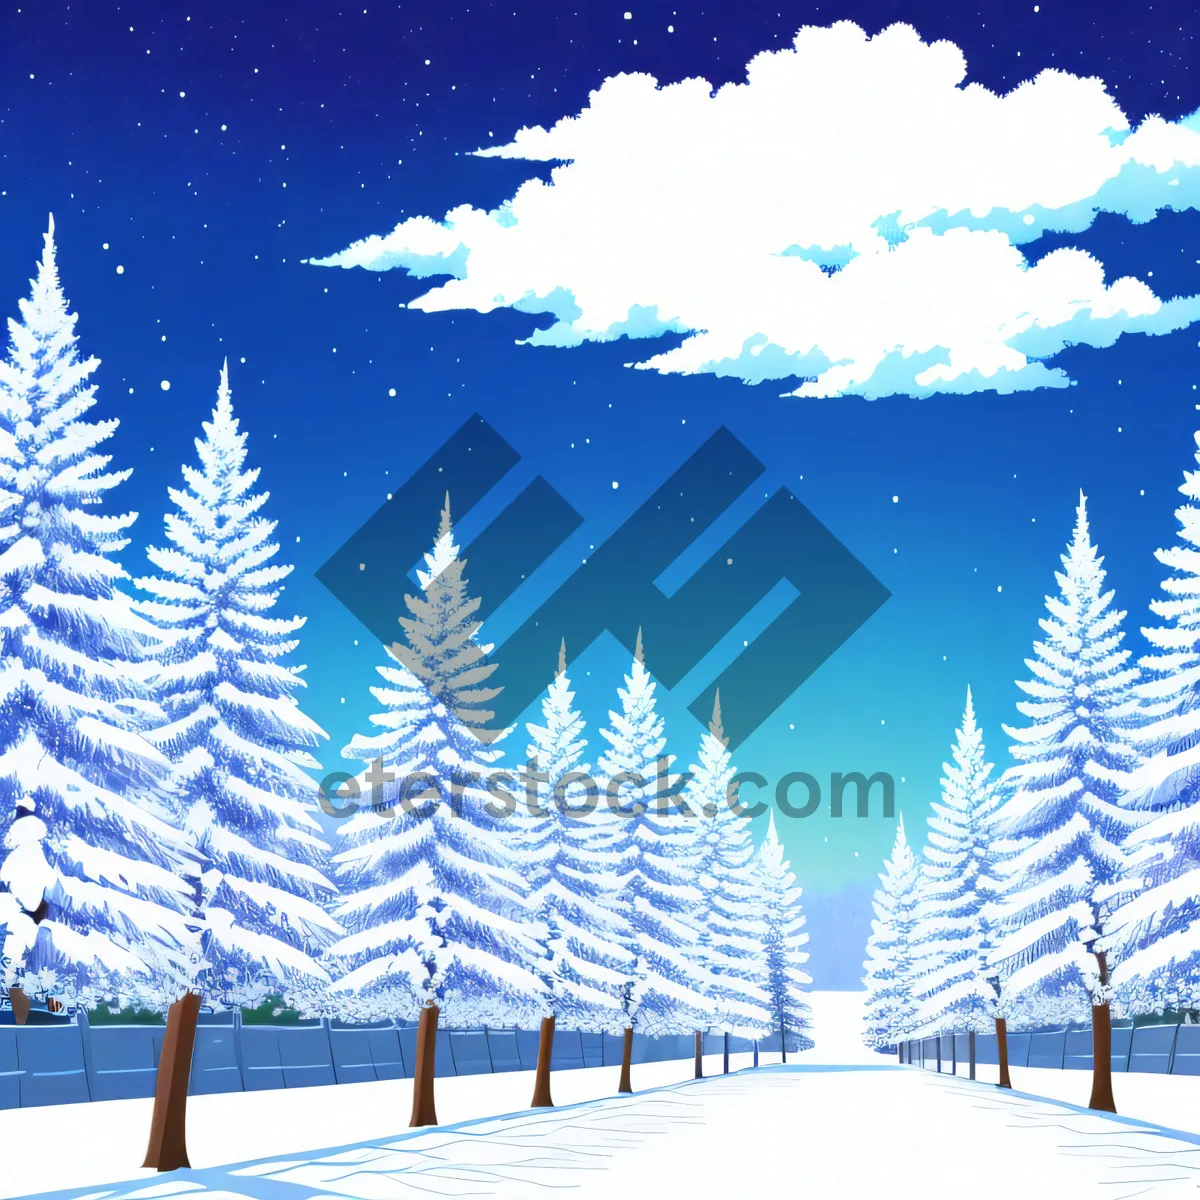 Picture of Winter Wonderland: Serene Evergreen Forest in Snow